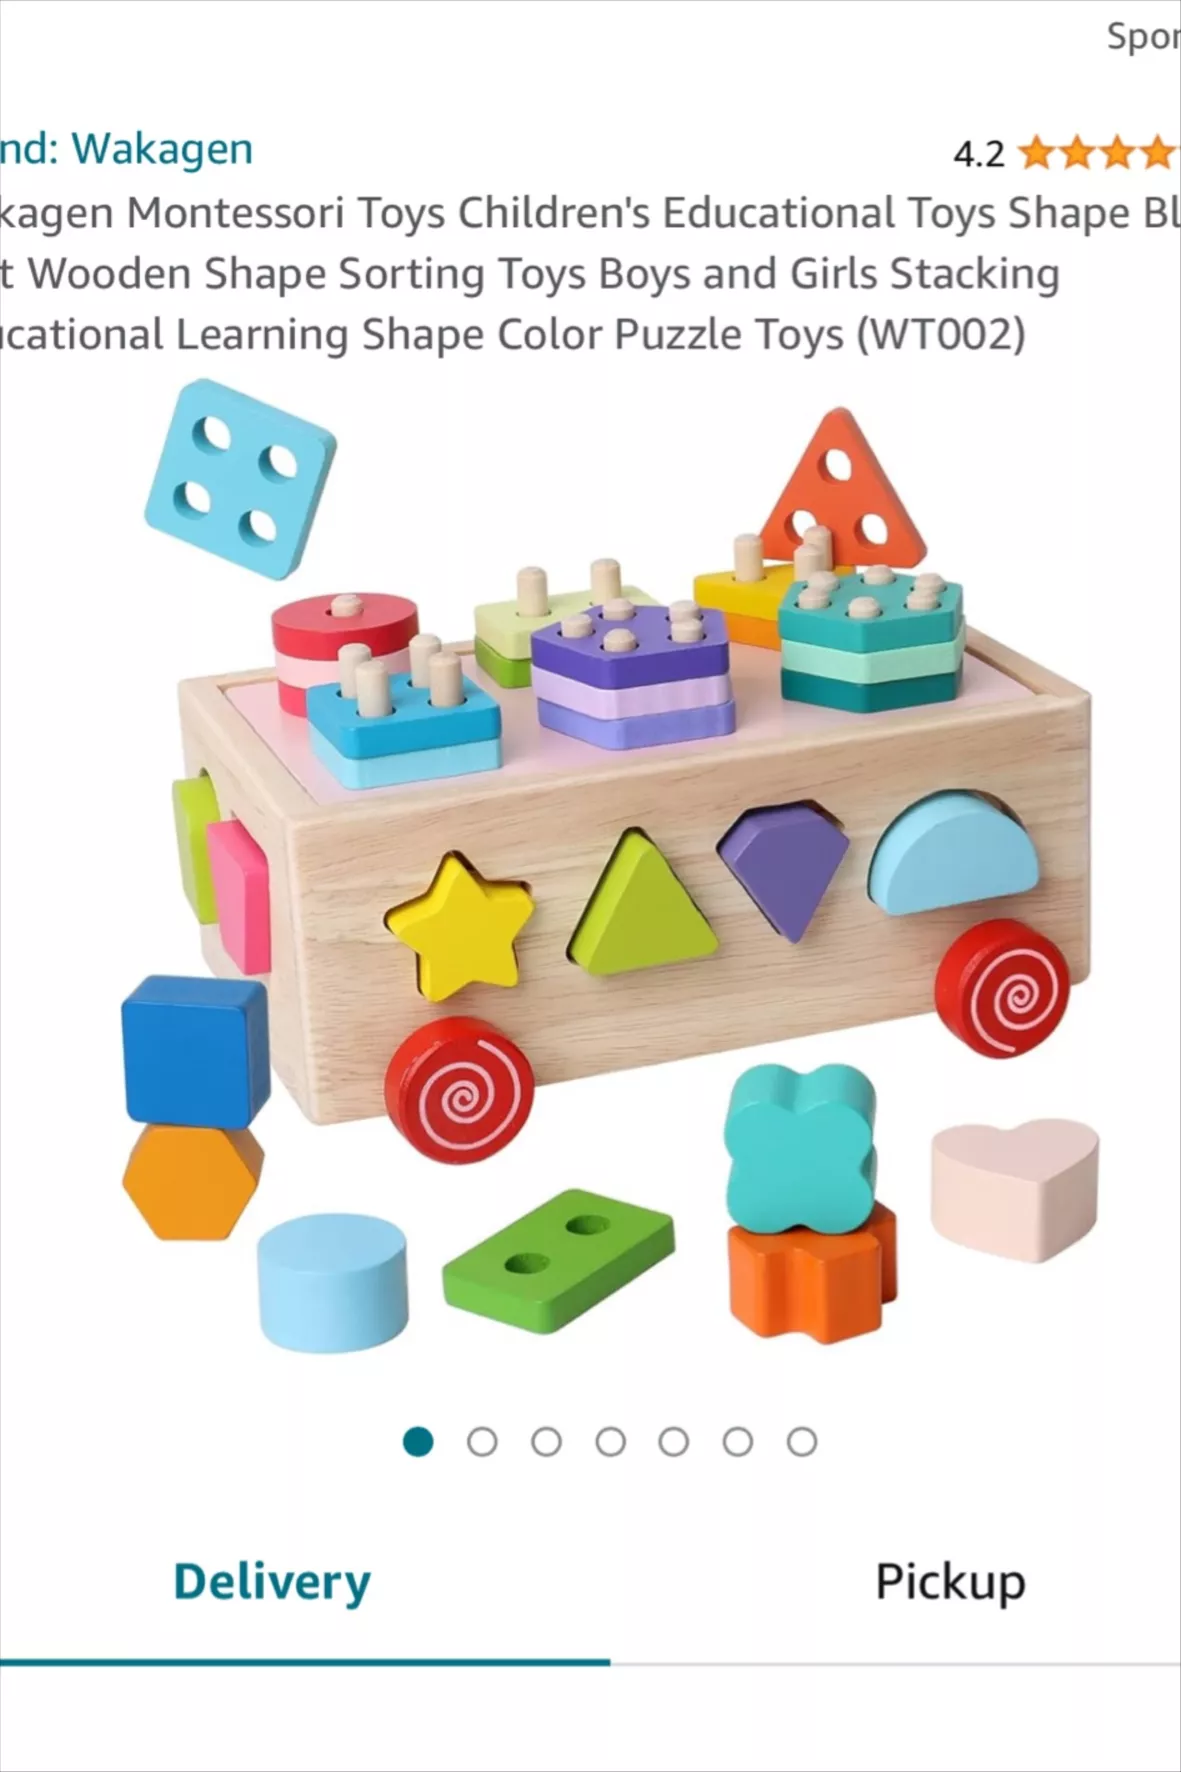  Wakagen Montessori Toys Children's Educational Toys